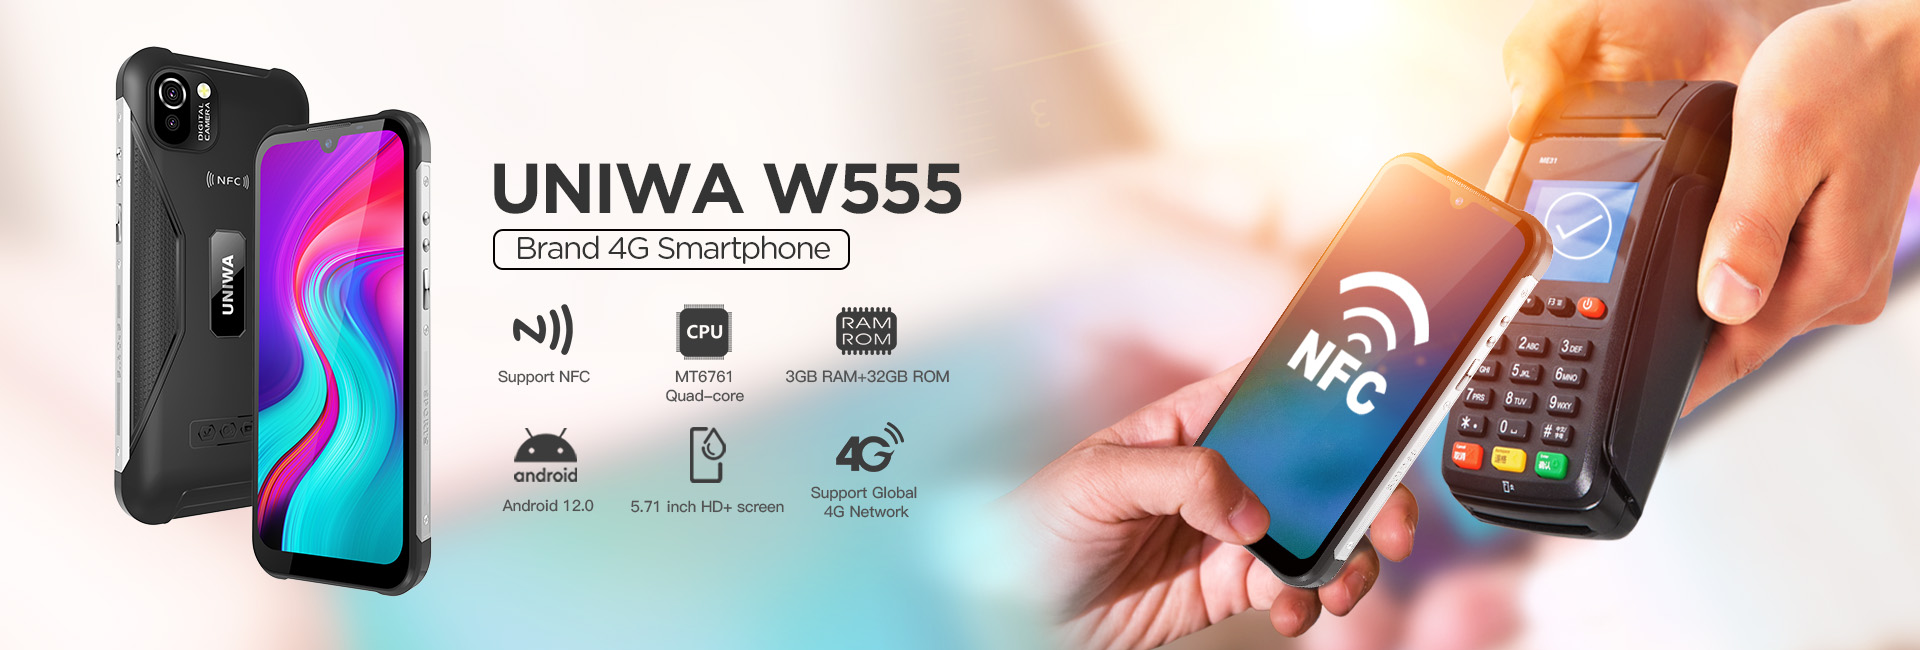 Smartphone UNIWA W555